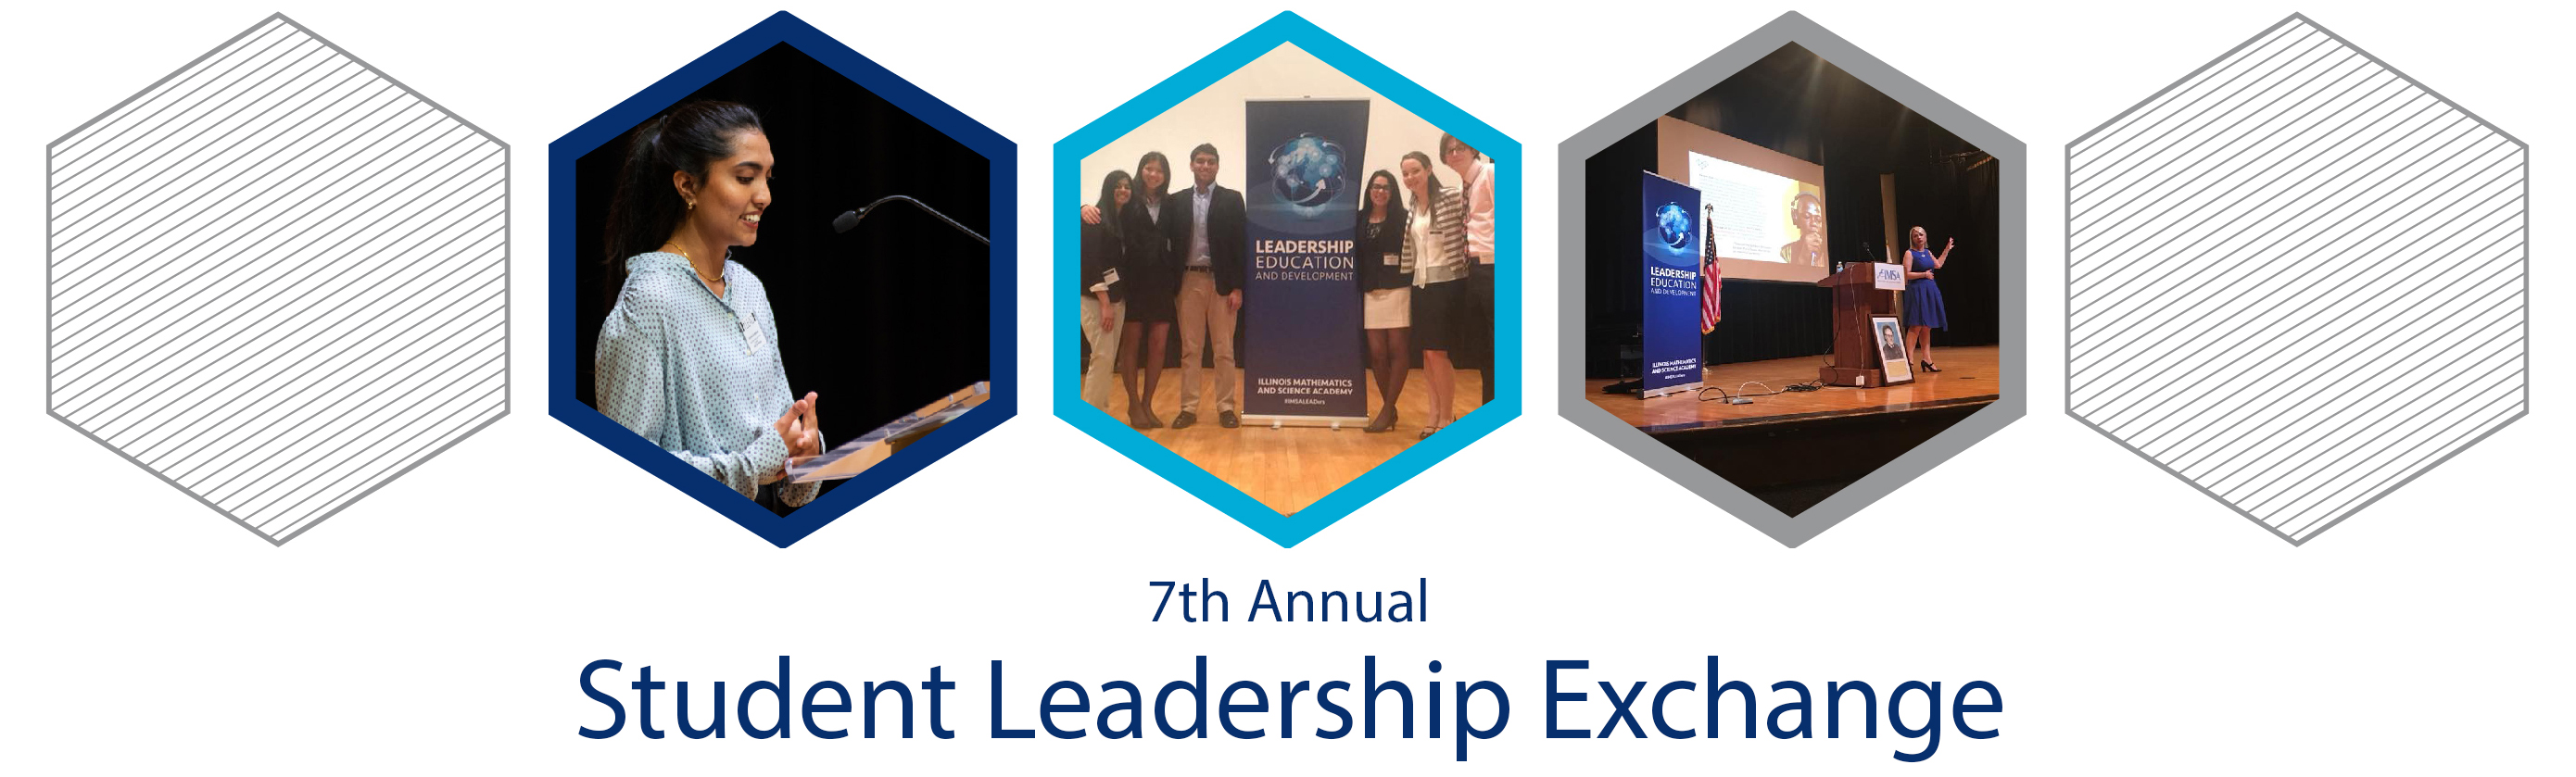 2020 Student Leadership Exchange